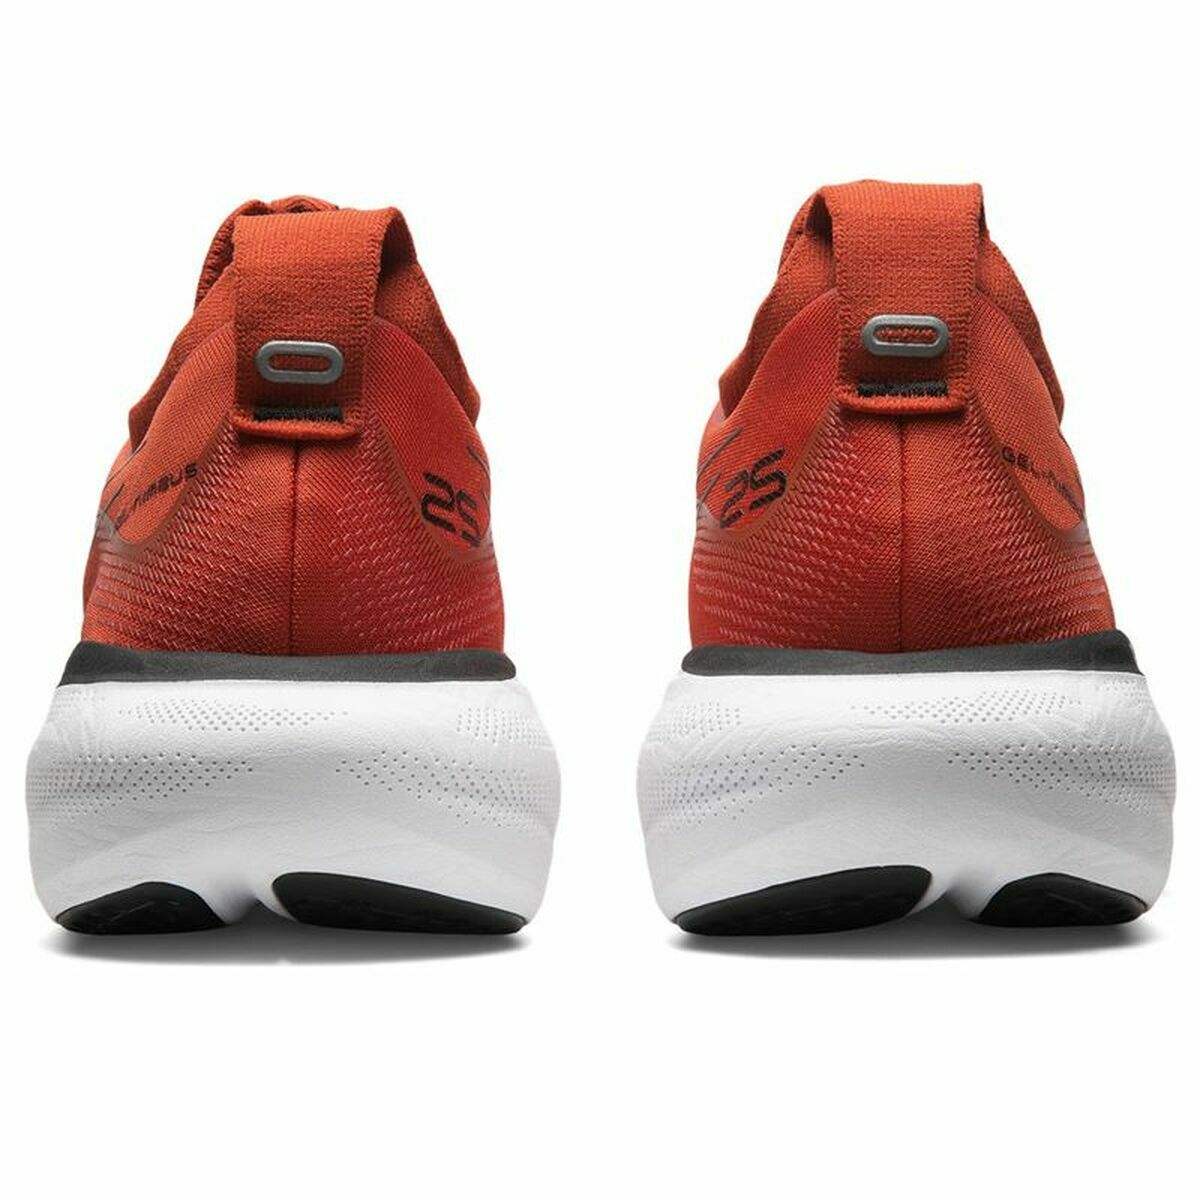 Chaussures de Running pour Adultes Asics Gel-Nimbus 25 Orange Homme - Asics - Jardin D'Eyden - jardindeyden.fr